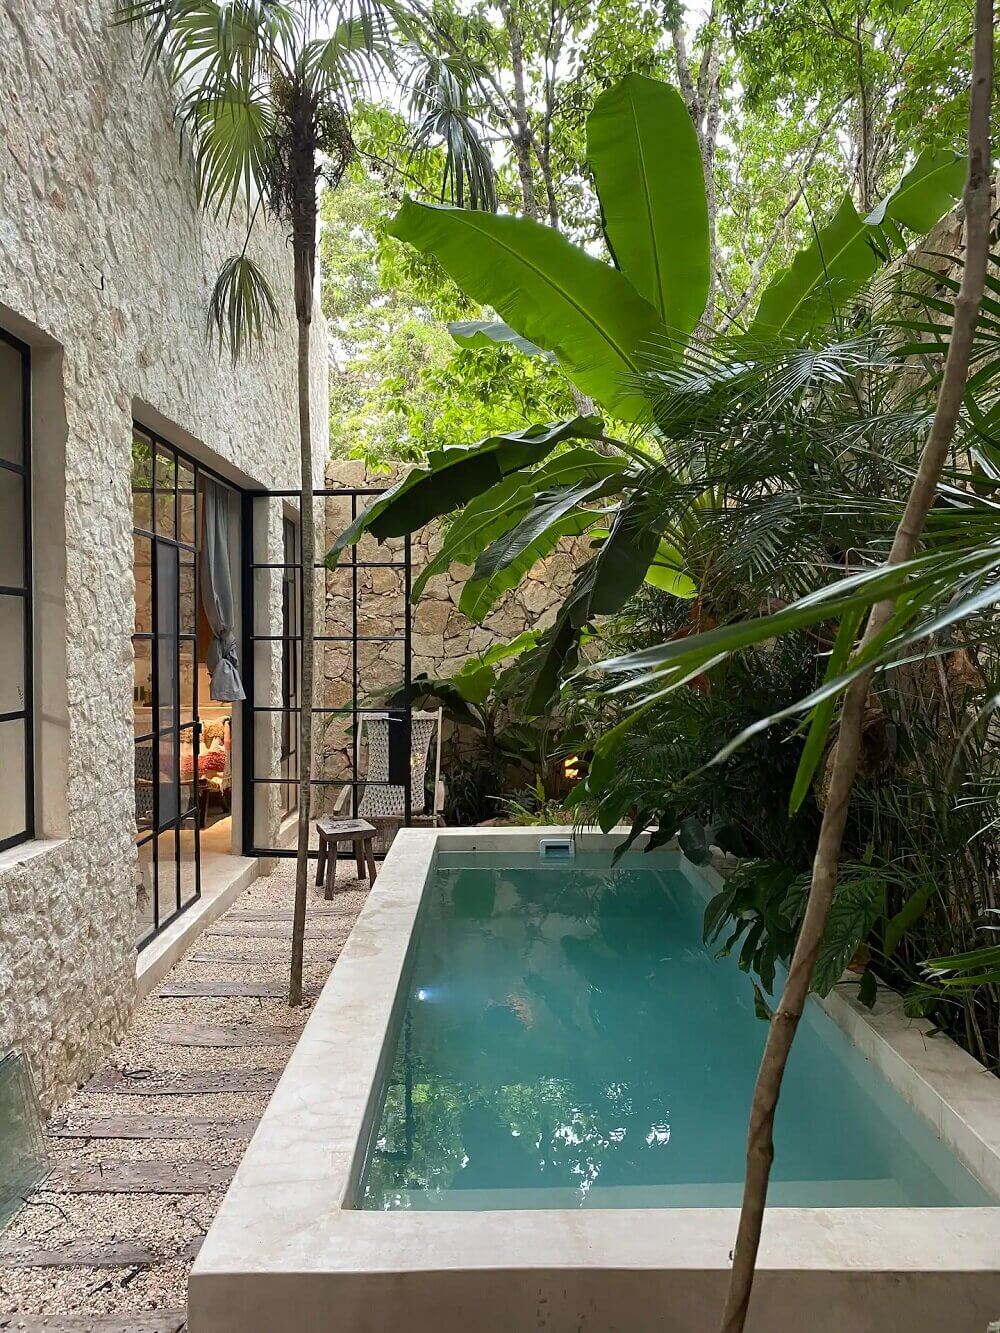 LianeTulum ABeautifulStudioApartmentAirbnbinMexico TheNordroom14 Liane Tulum: A Beautiful Studio Apartment Airbnb in Mexico